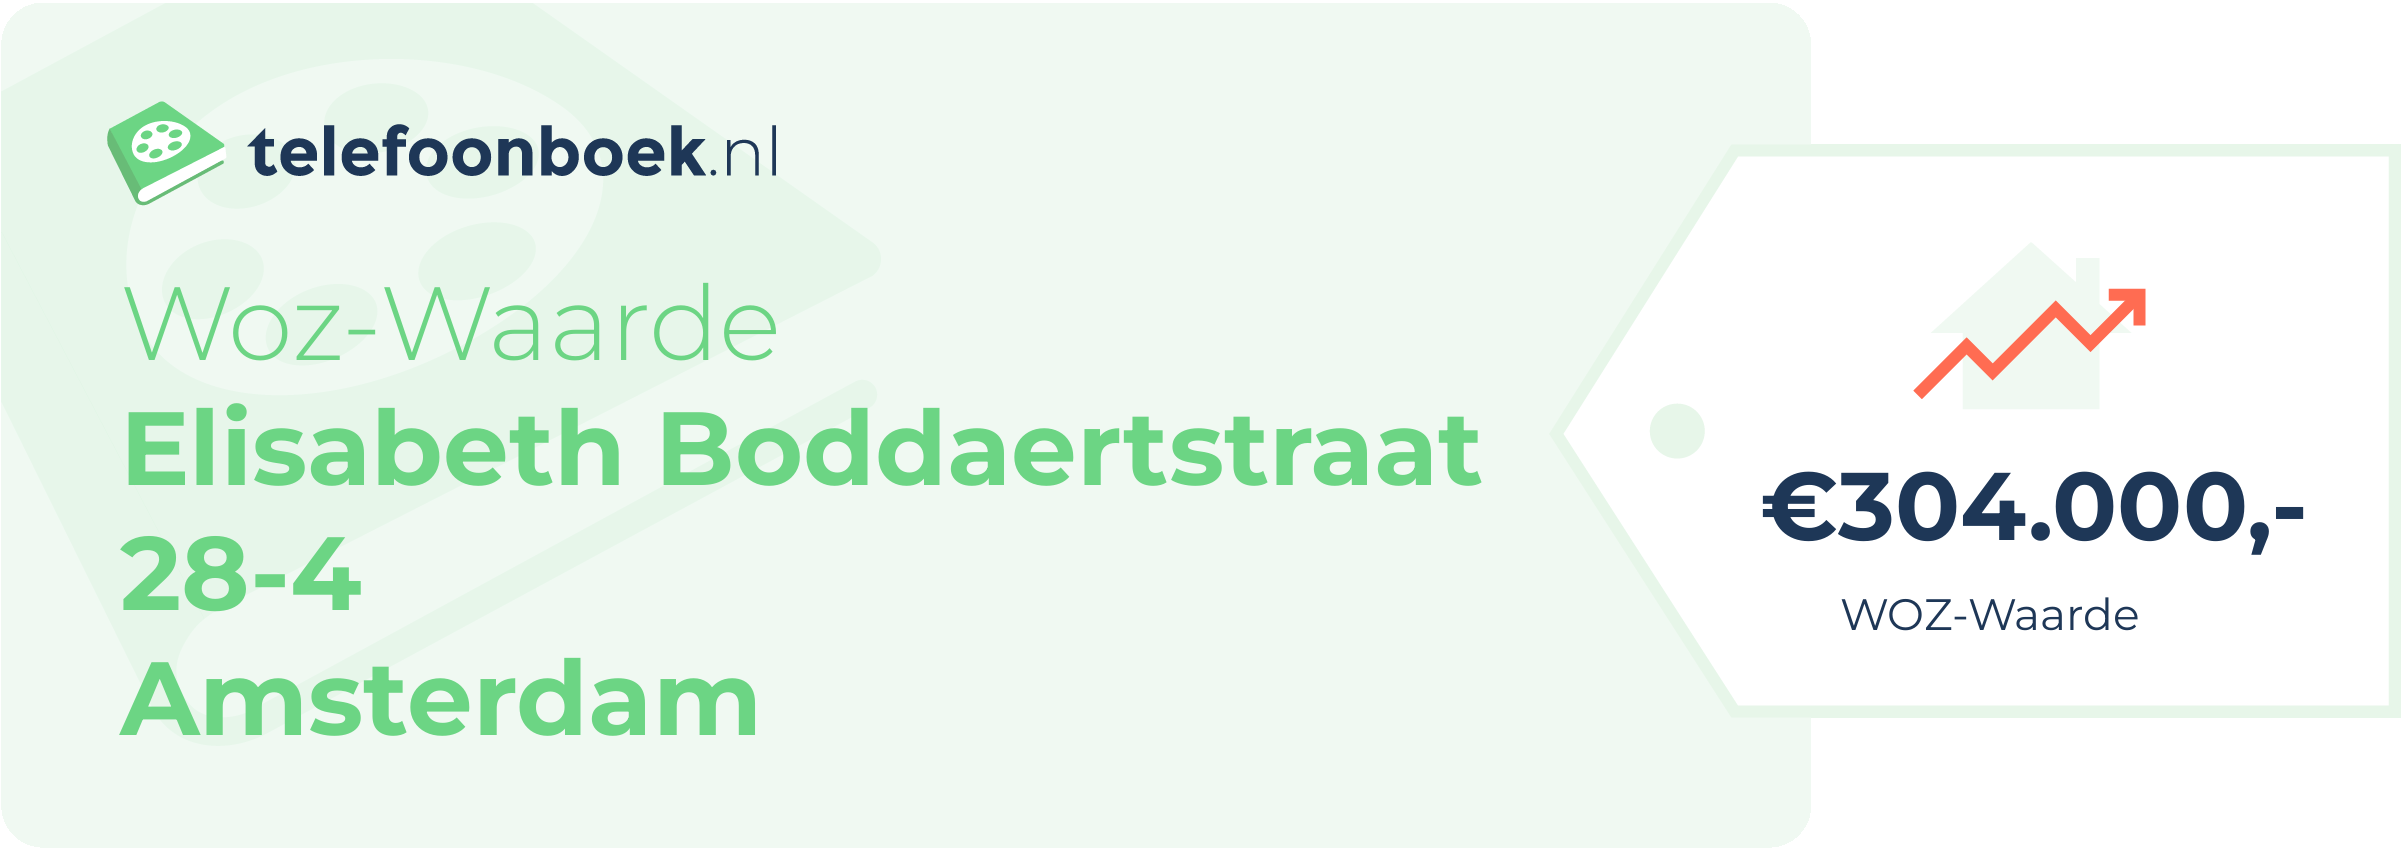 WOZ-waarde Elisabeth Boddaertstraat 28-4 Amsterdam